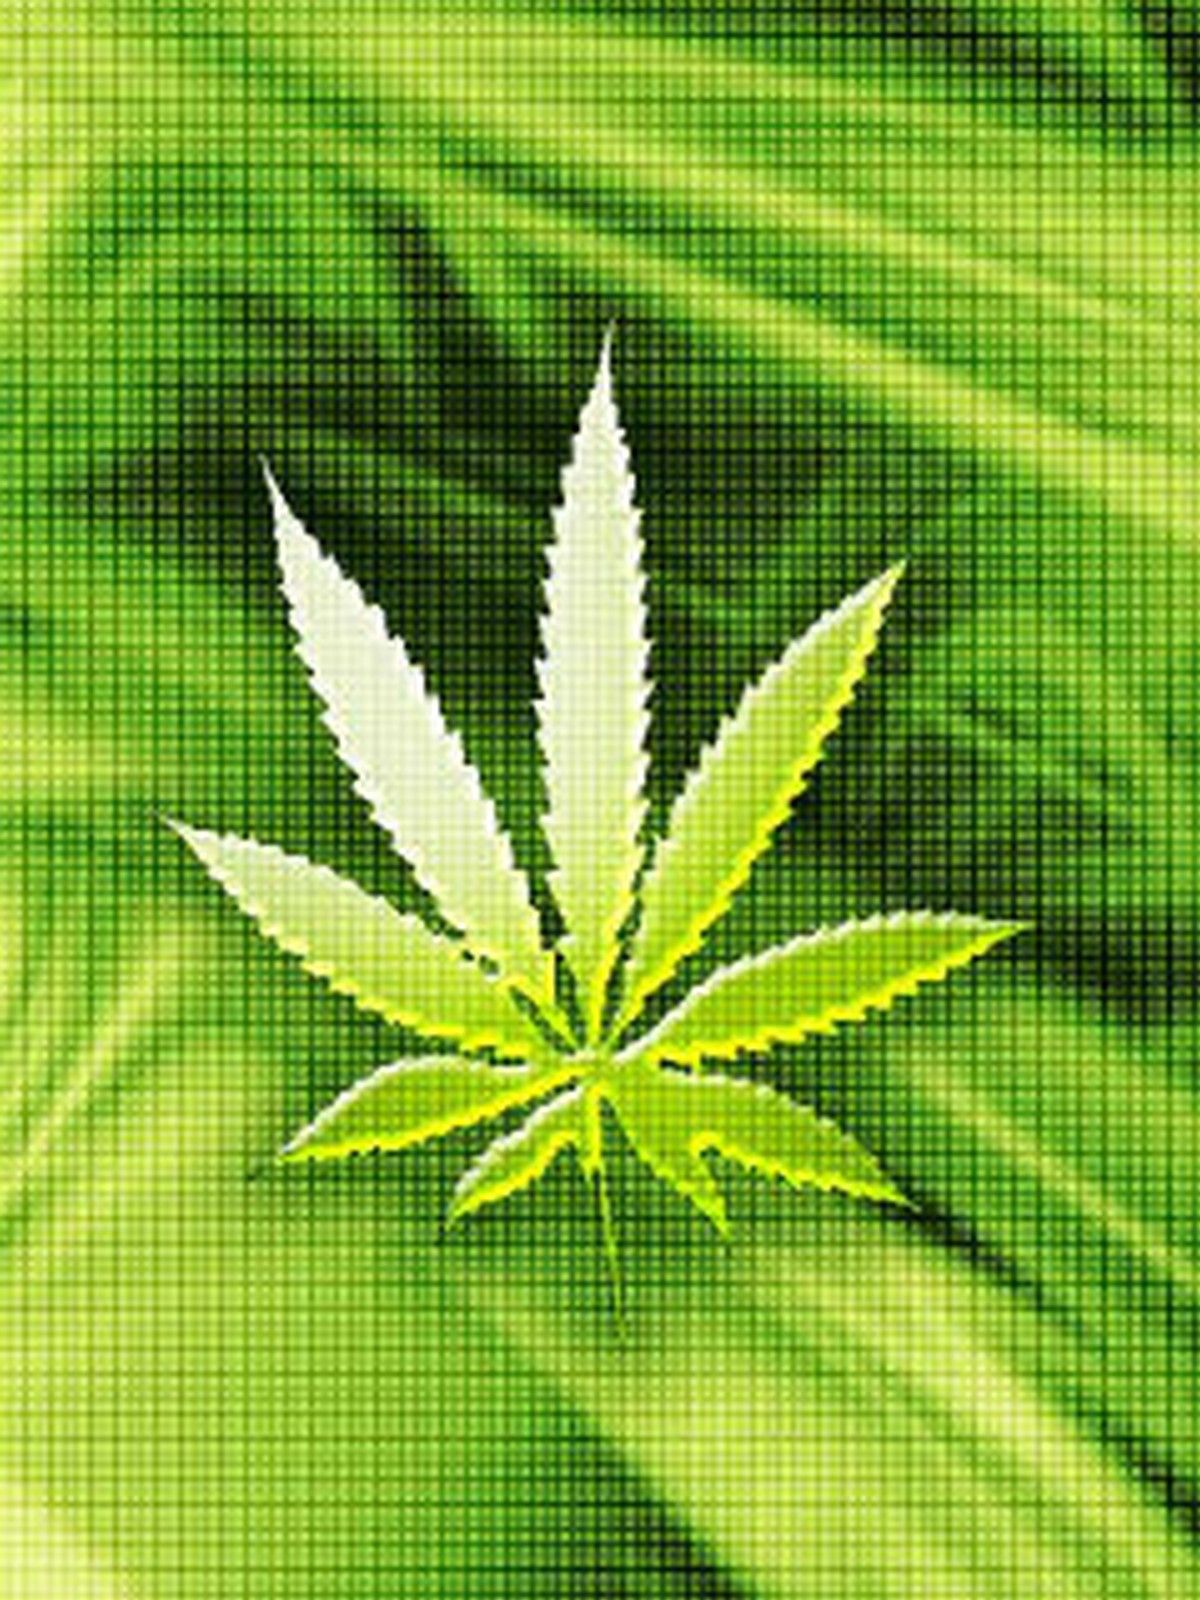 Free download Wallpaper Marijuana Weed Plant 640 X 500 159 Kb Jpeg HD Wallpaper [1200x1600] for your Desktop, Mobile & Tablet. Explore Marijuana Wallpaper for Cell Phones